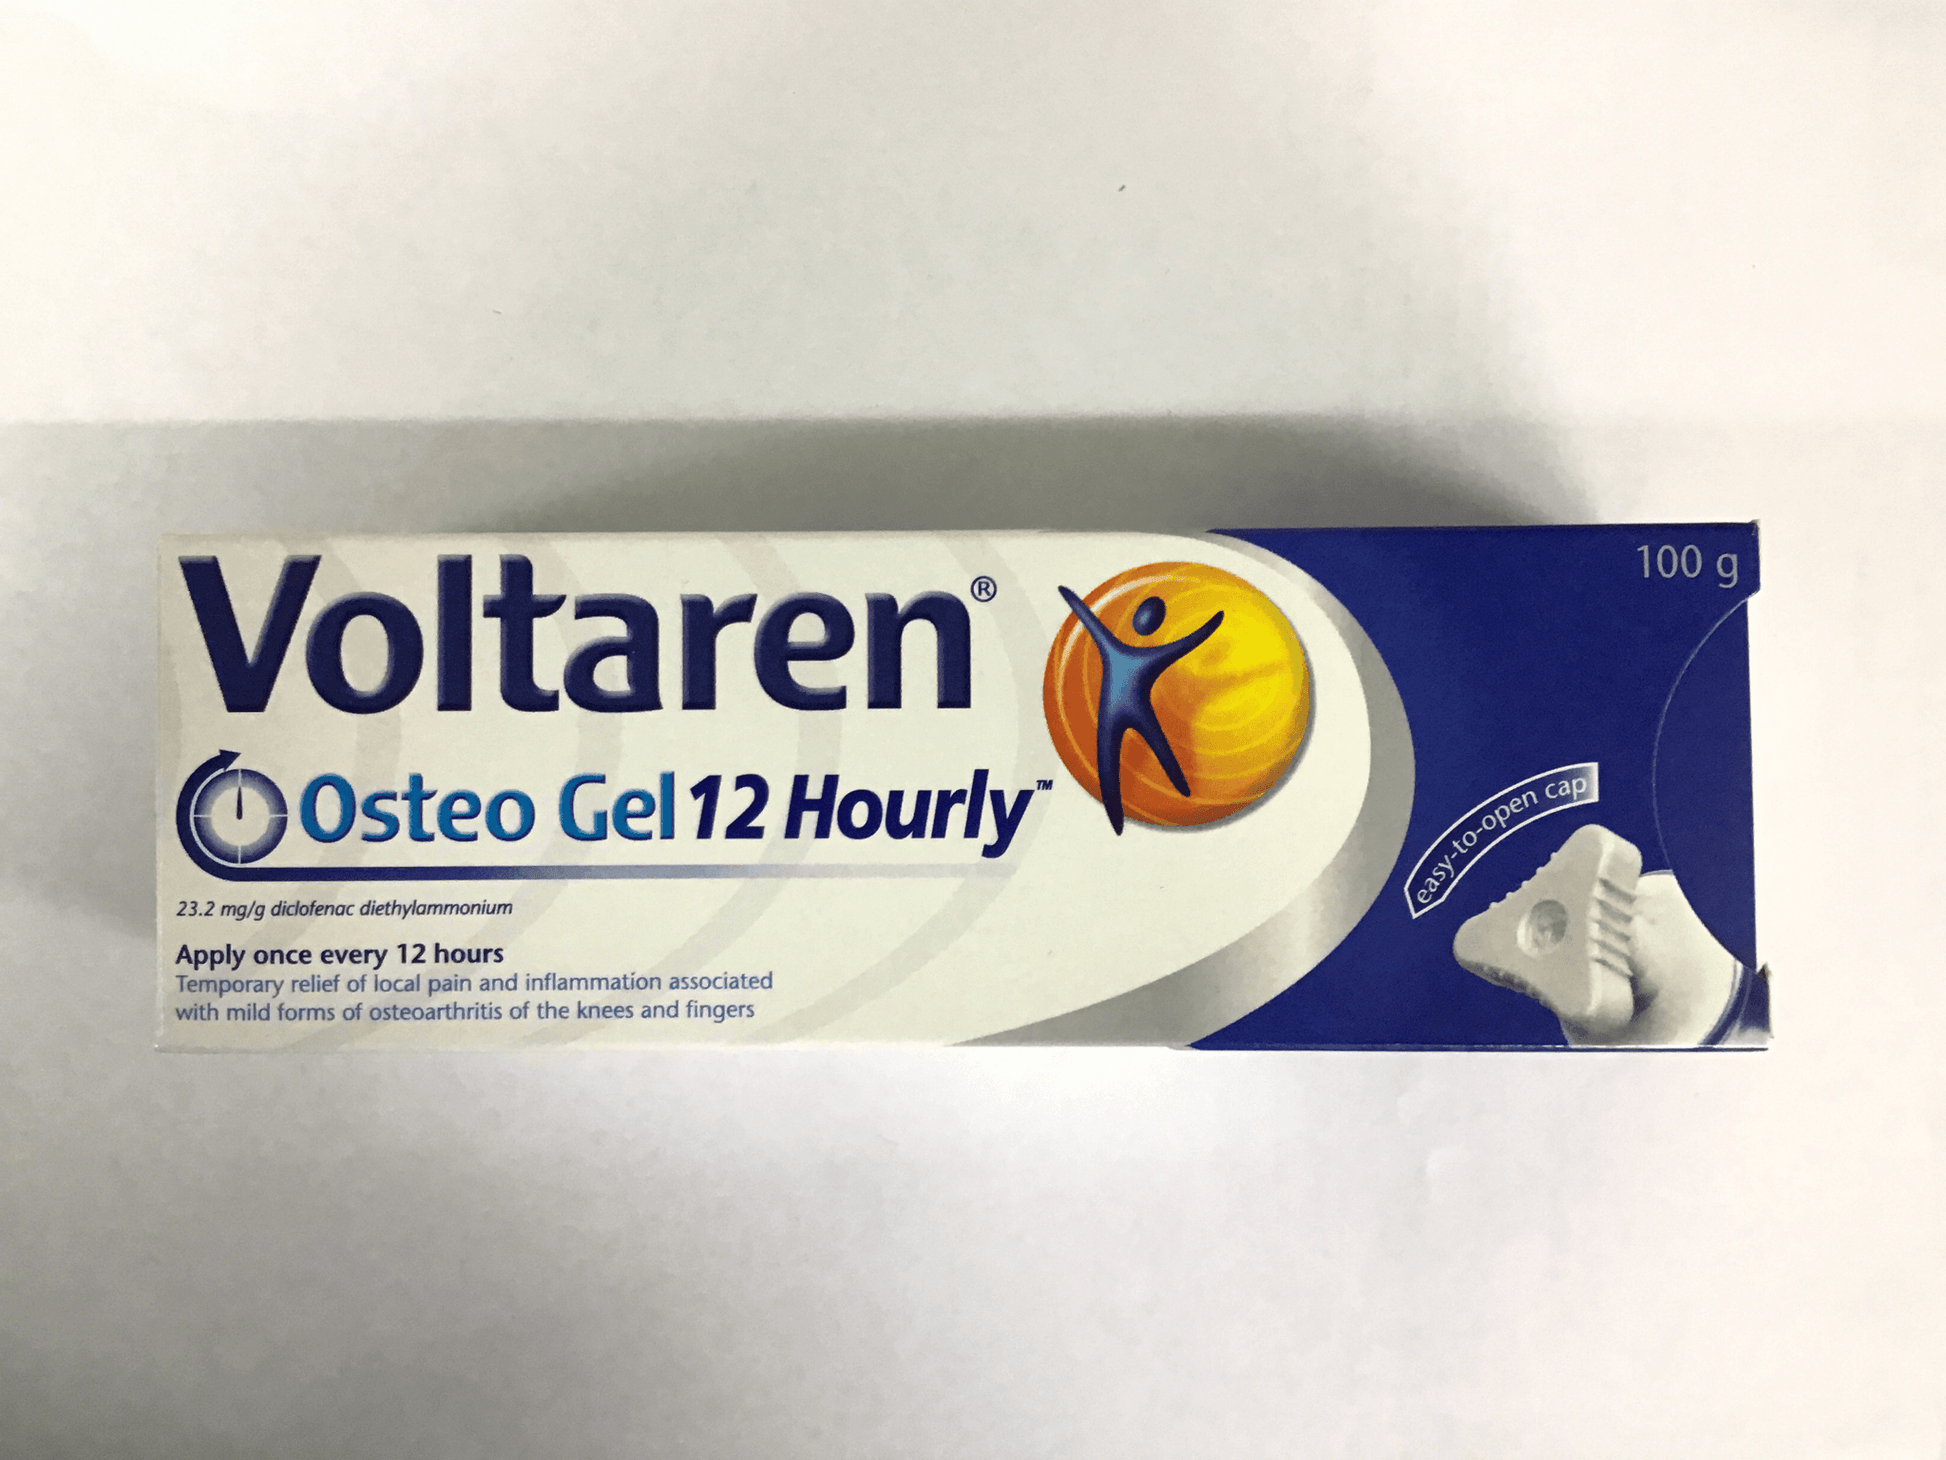 Voltaren Osteo Gel 12 Hourly 100g